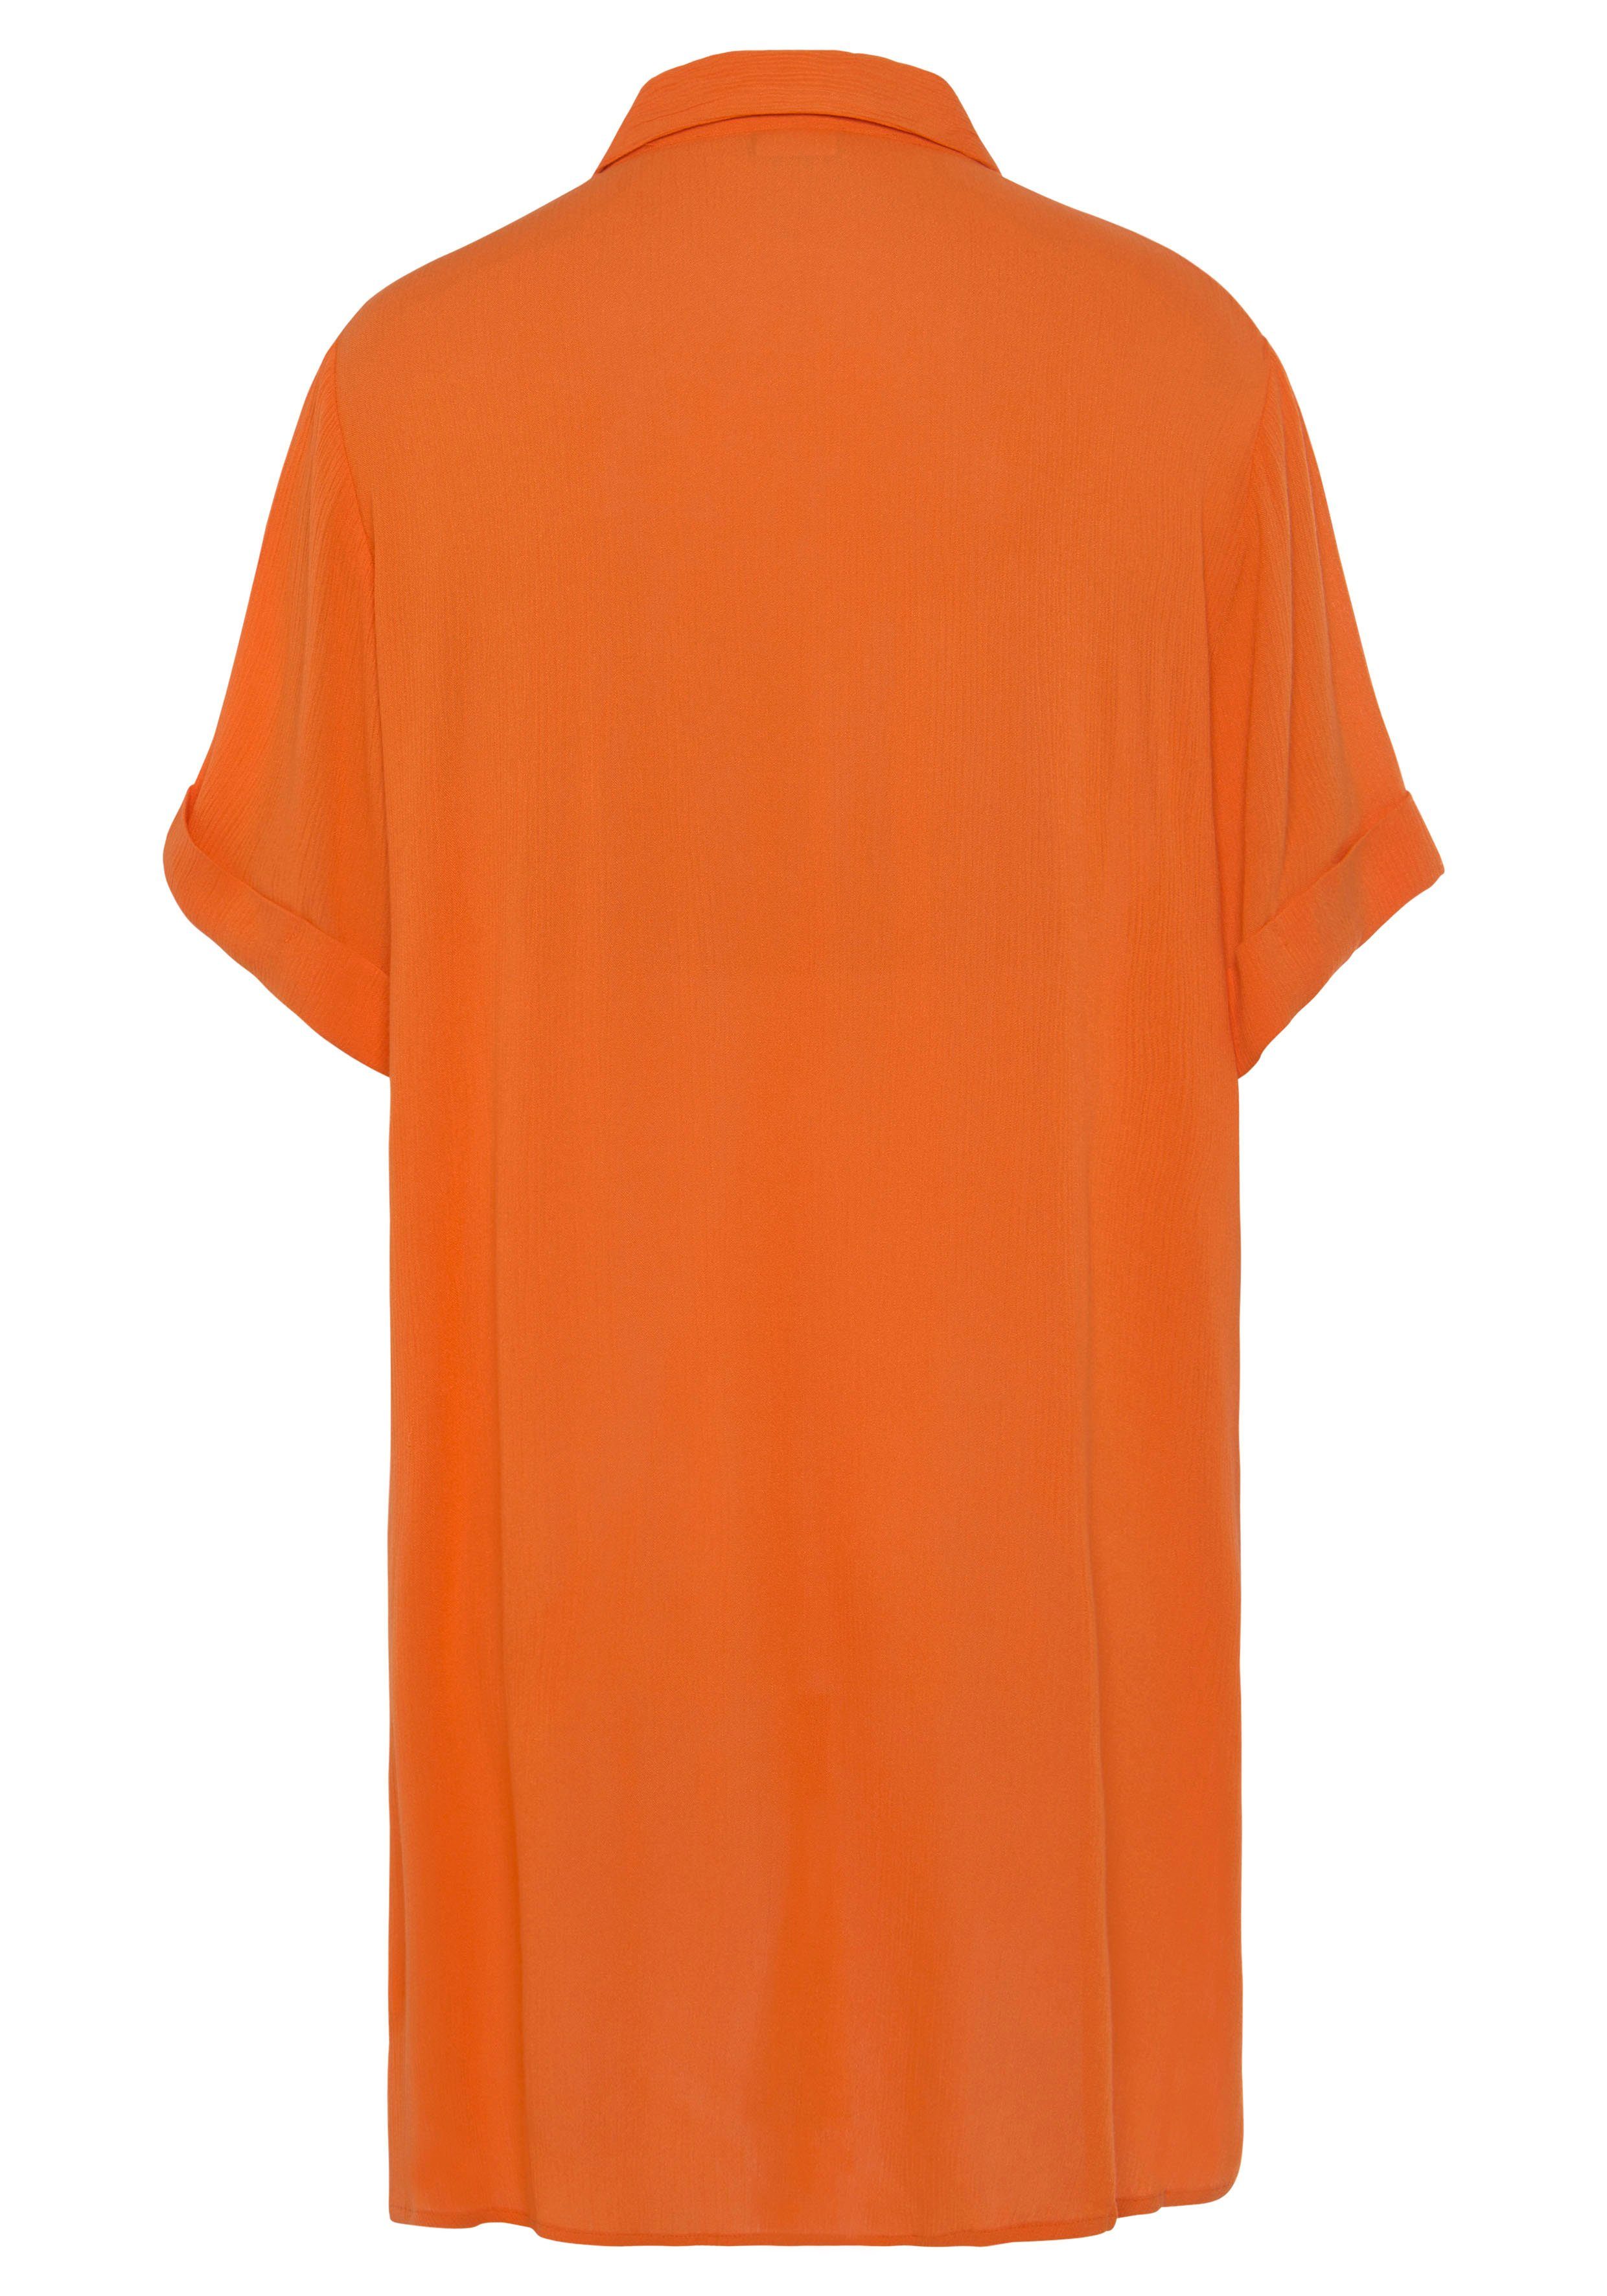 mit sommerlich Blusenkleid, orange LASCANA Longbluse Kurzarmbluse, Knopfleiste,